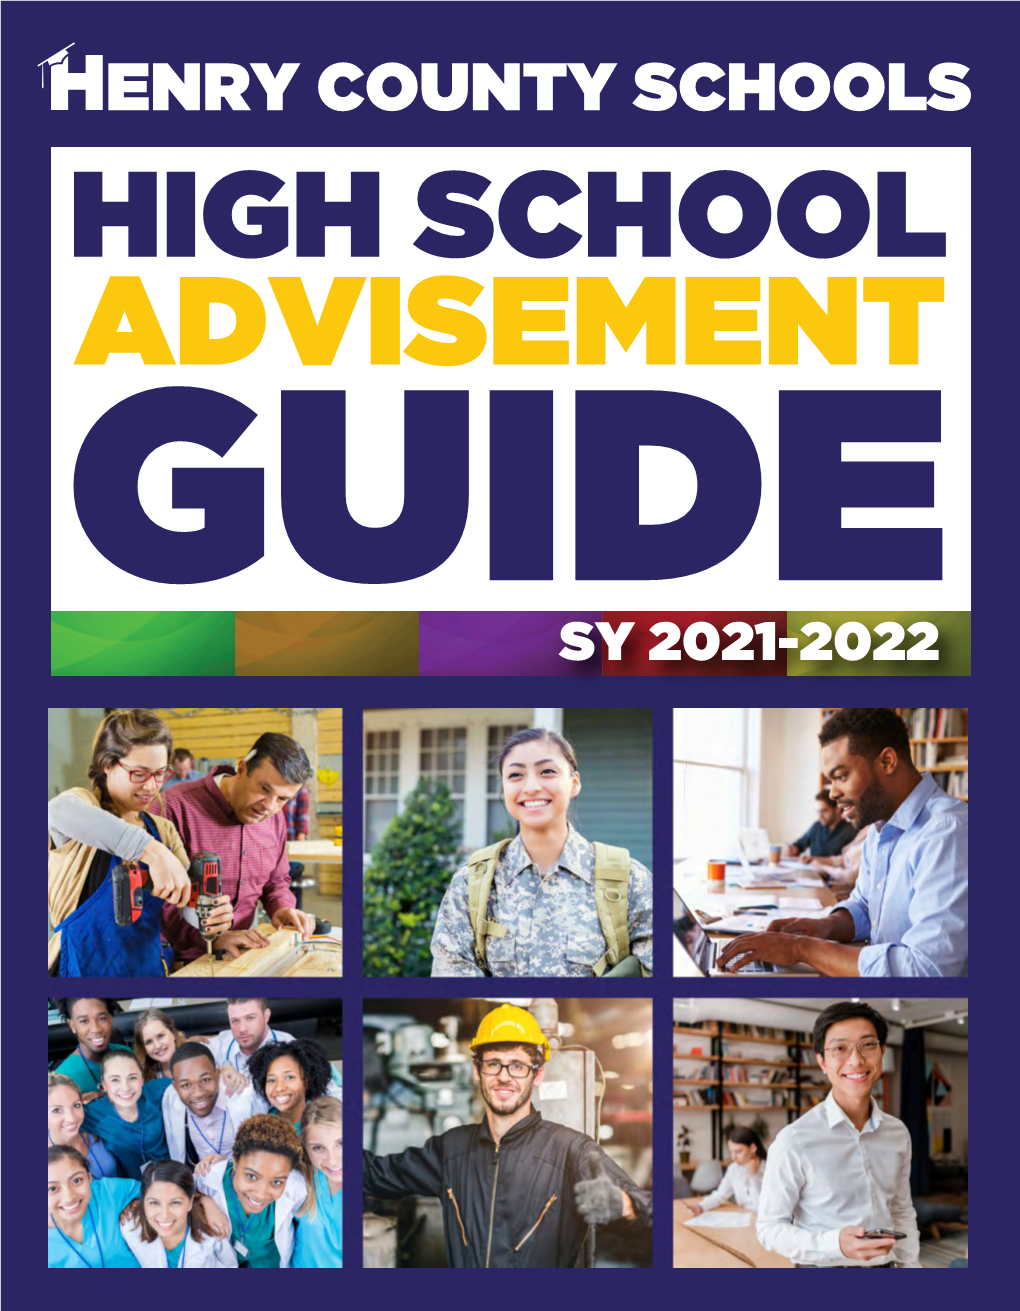 Advisement Guide Sy 2021-2022